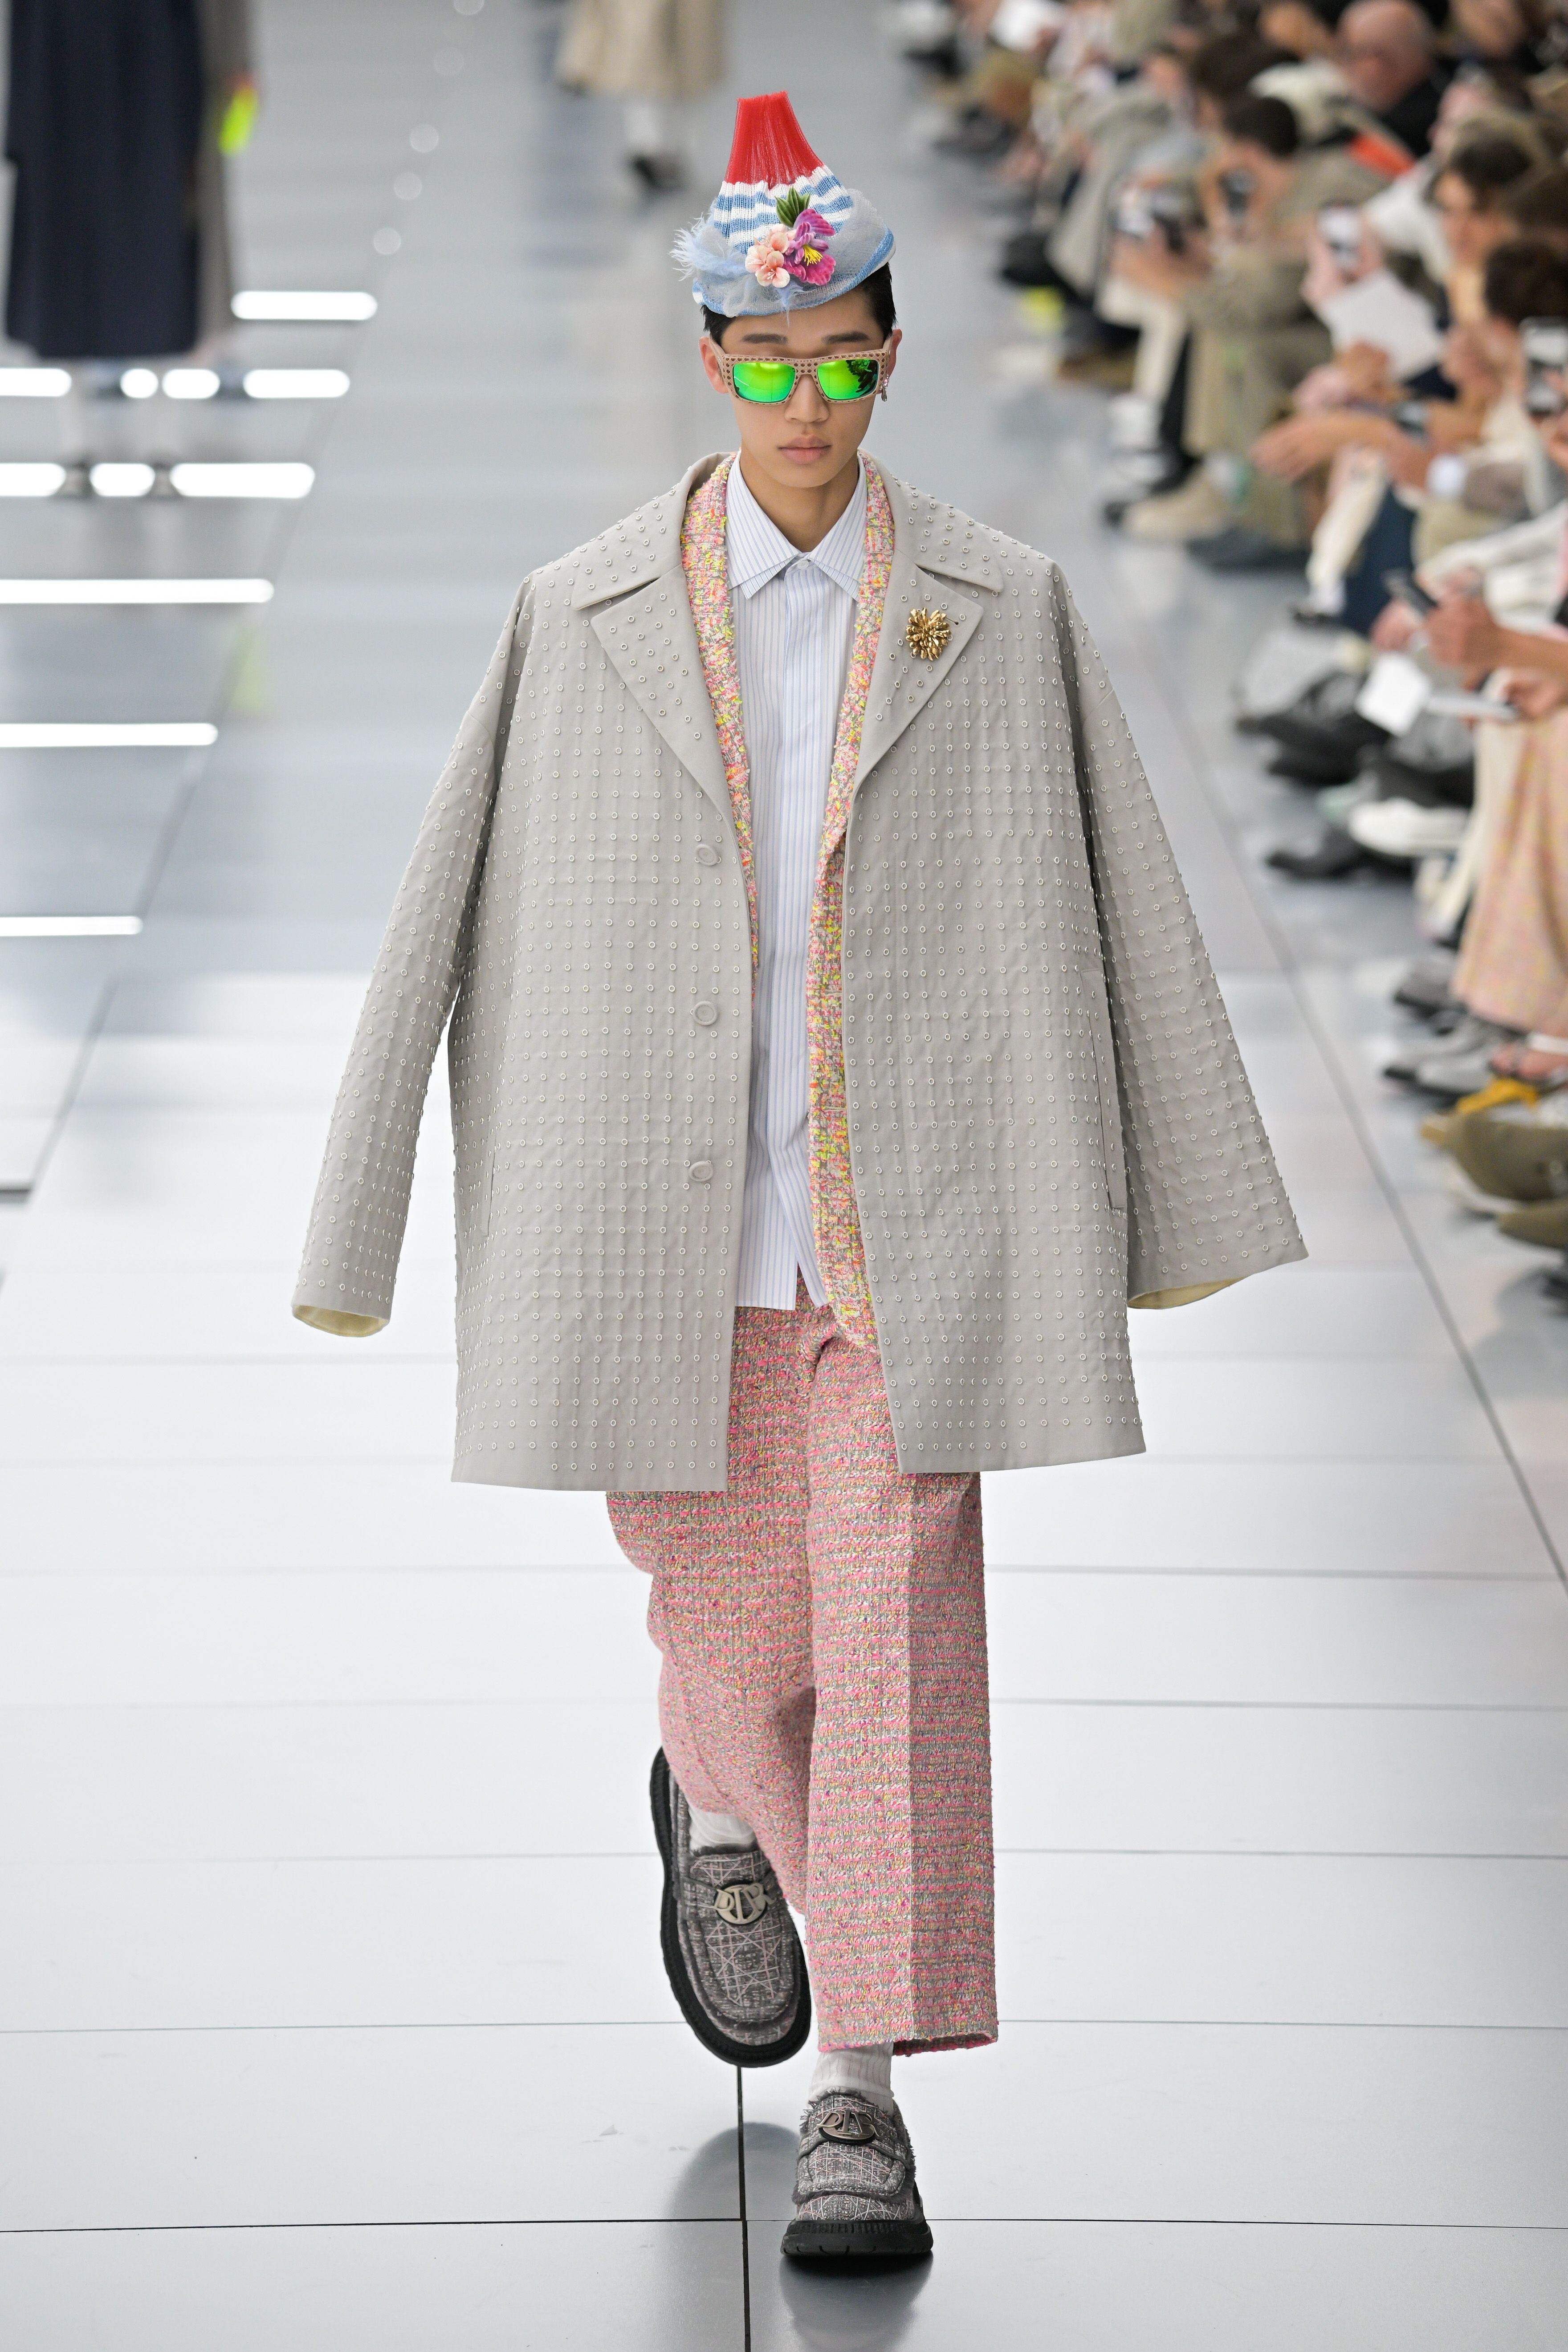 Louis Vuitton men's collection at Paris Fashion Week[1]